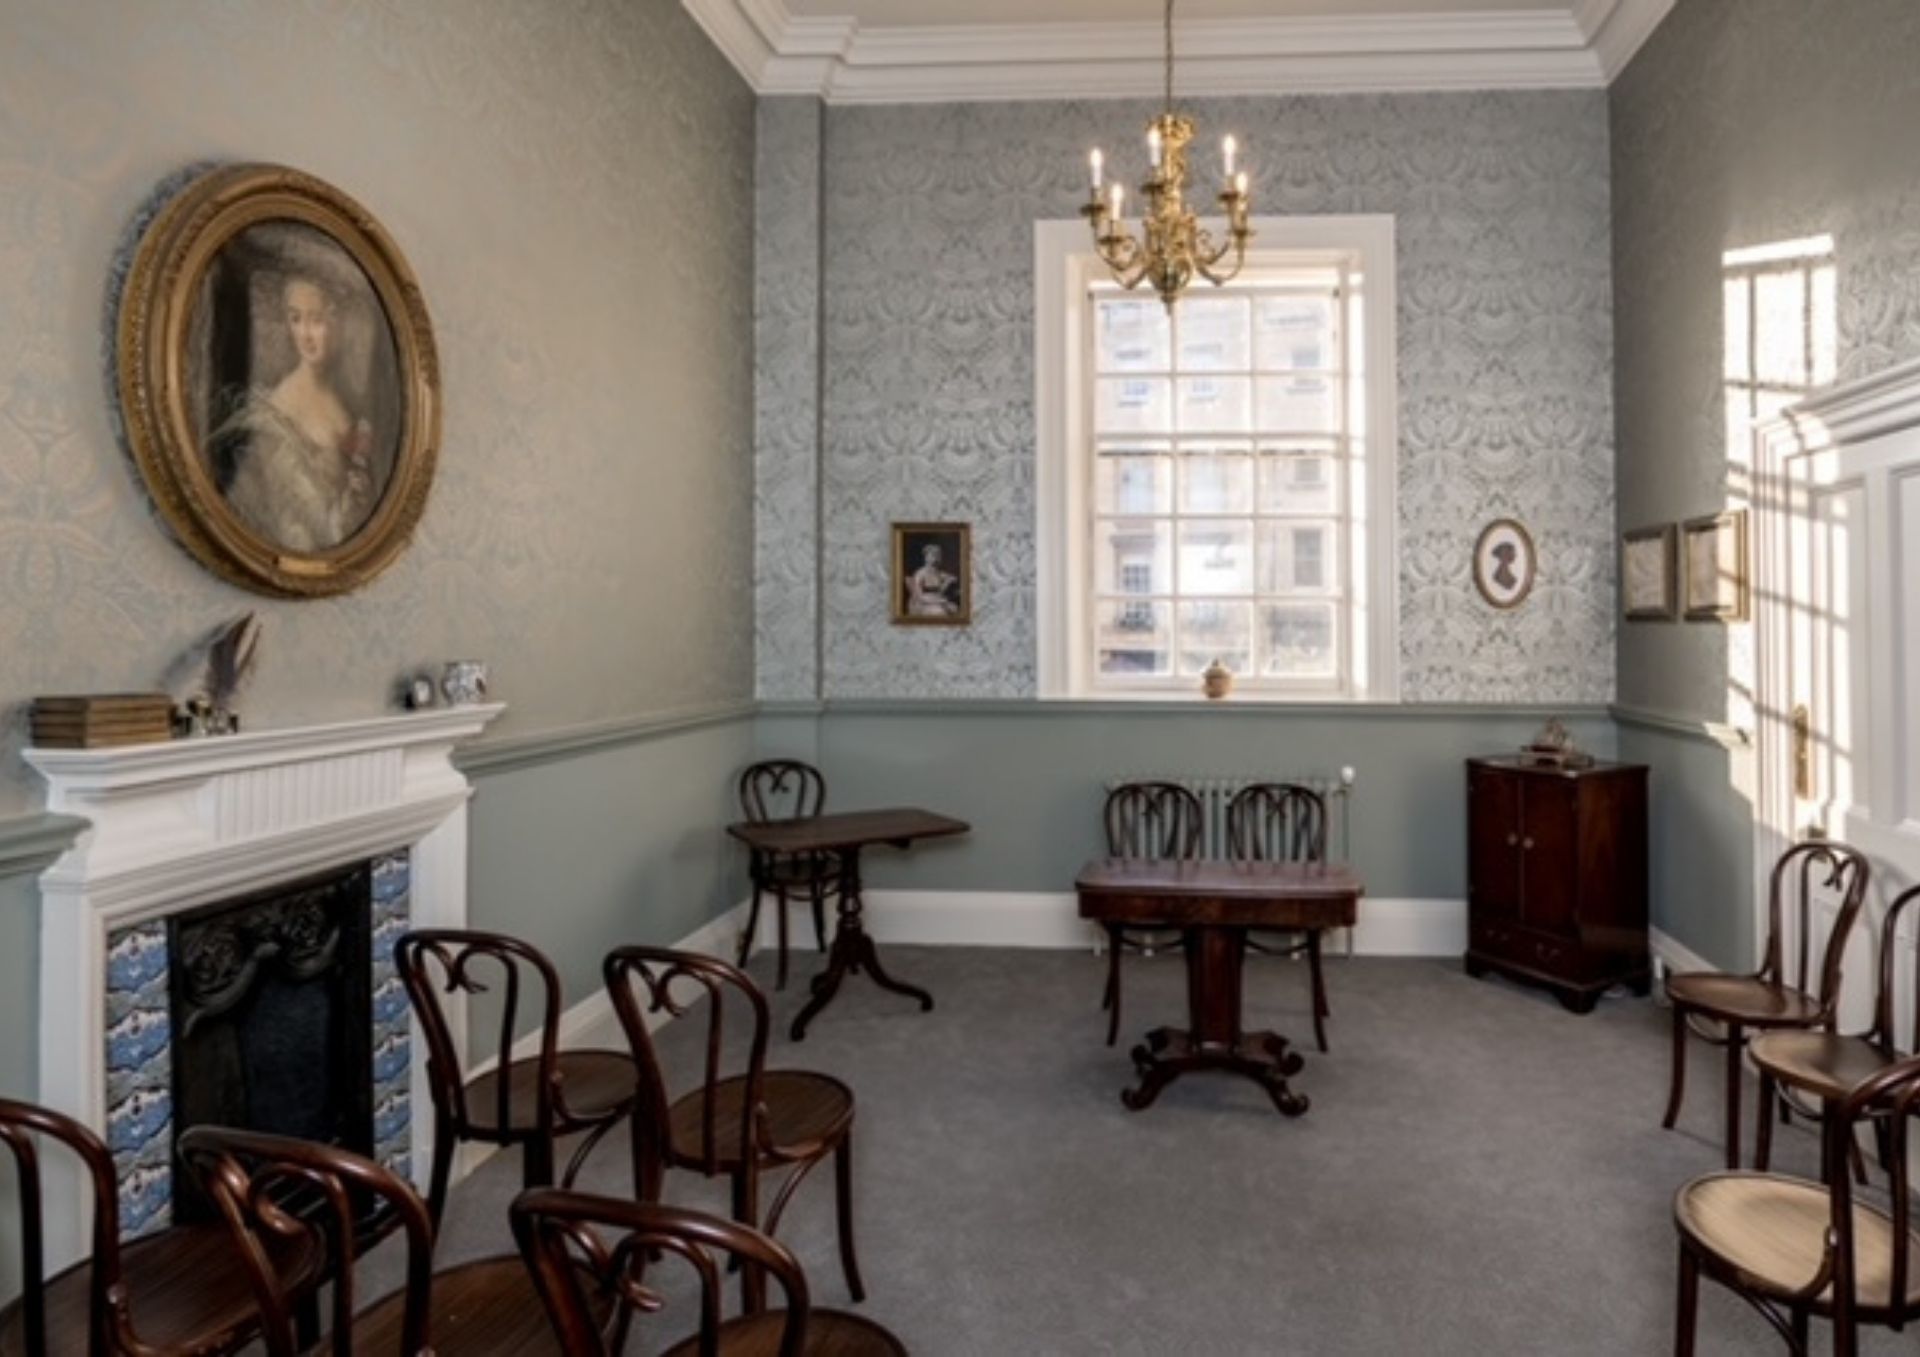 An interior shot of the Jane Austen Room